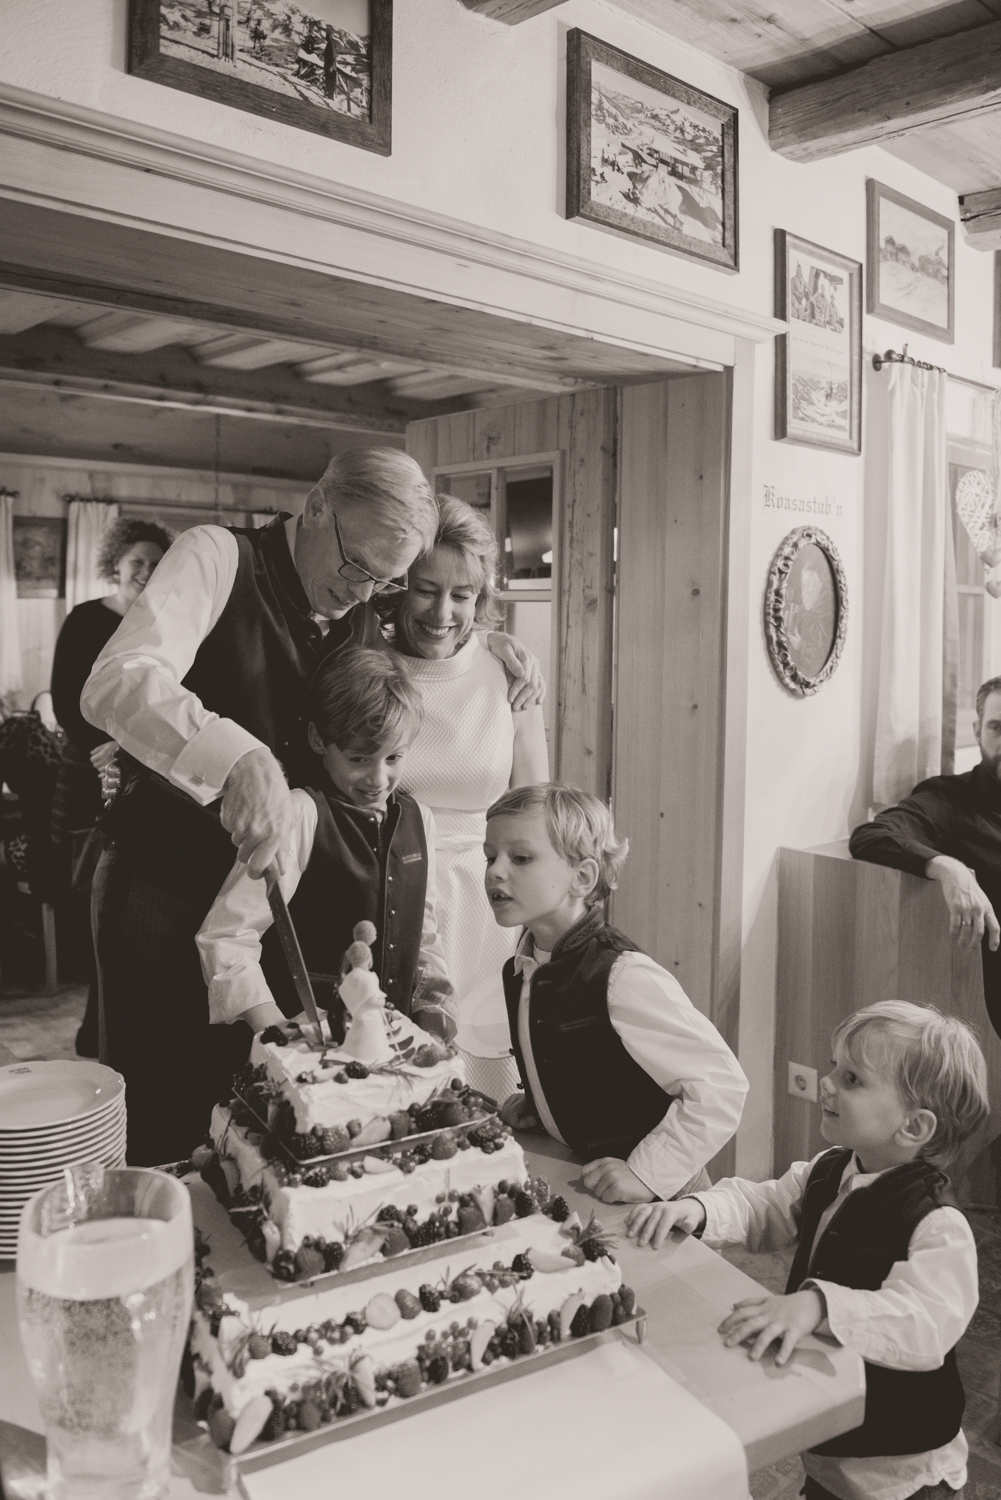 A bride, groom and their children cutting their ski themed wedding cake at their winter wedding in Austria